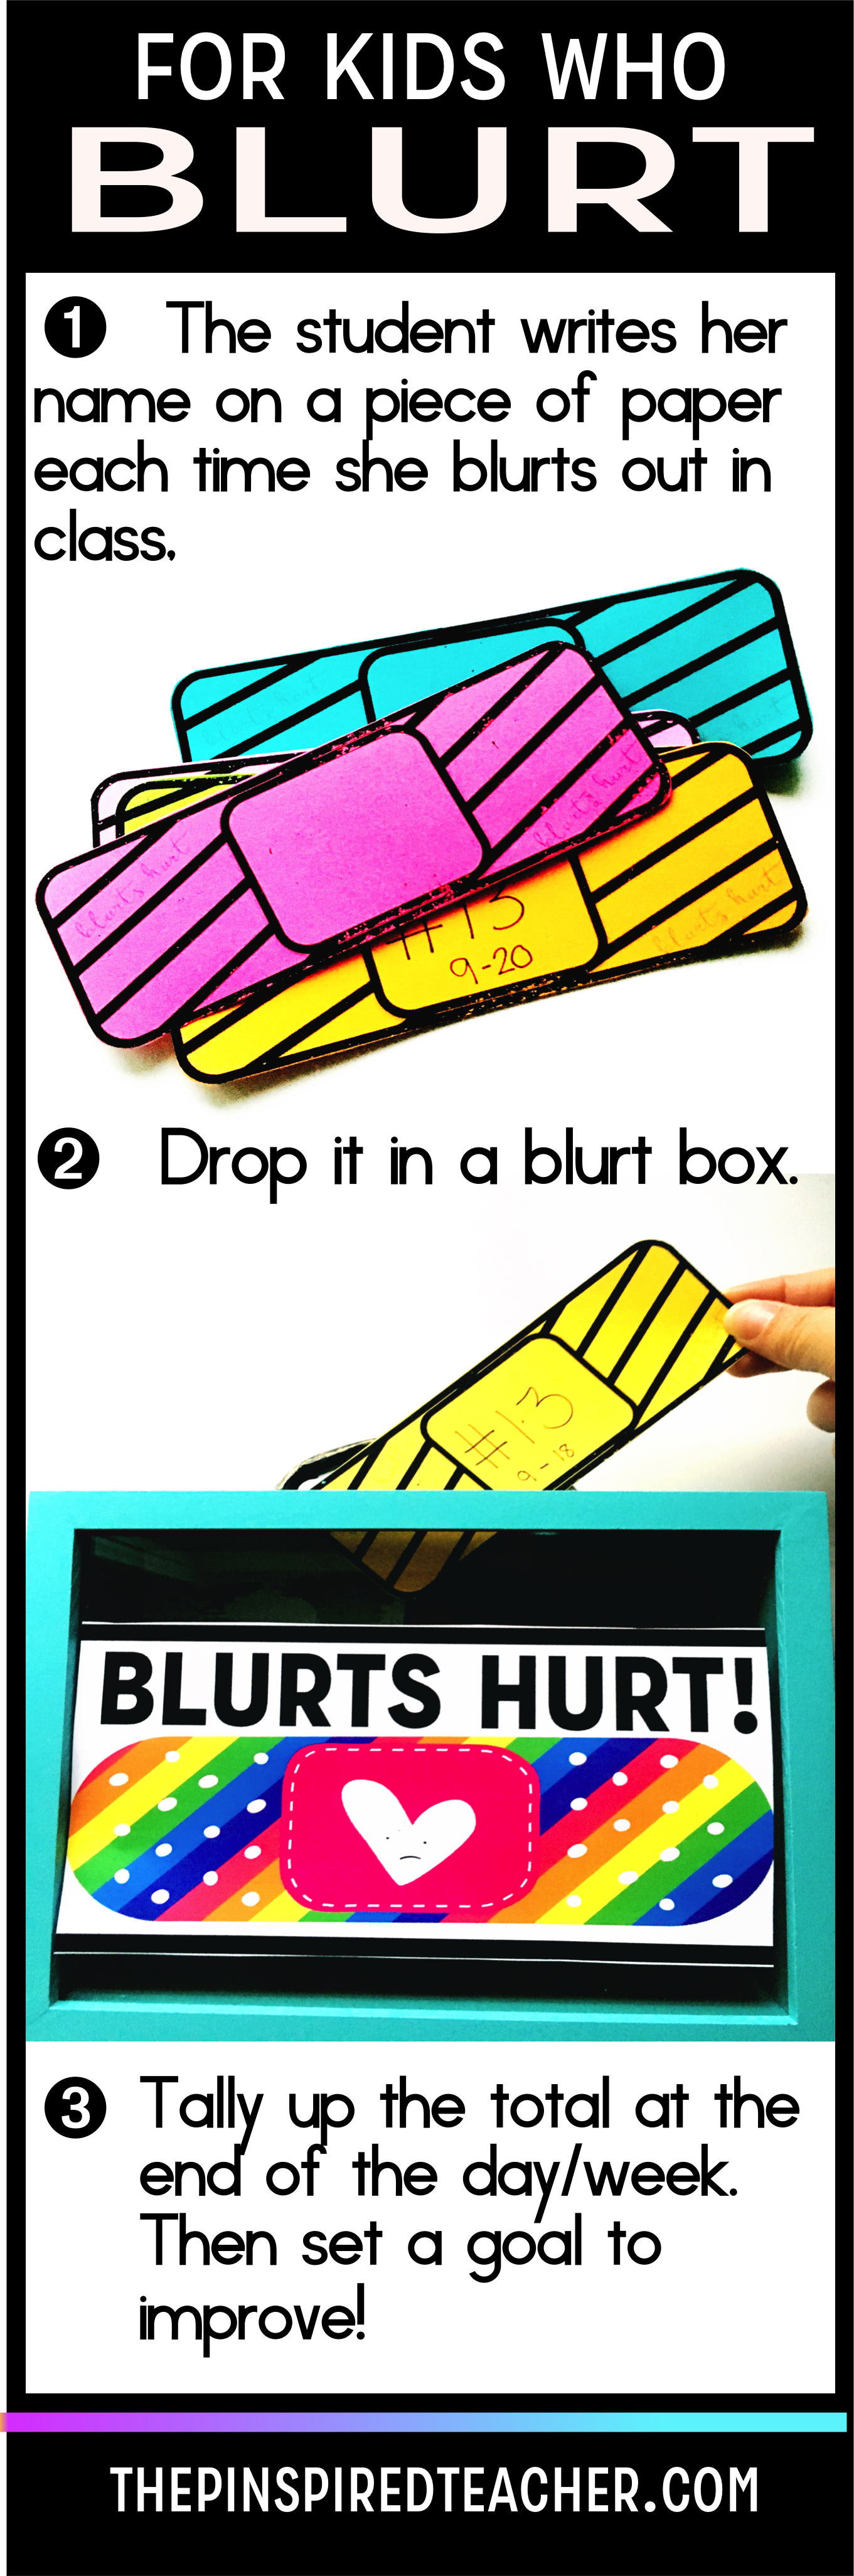 Blurt Box Classroom Management Strategy to Reduce Blurting Out in Class | Classroom Management Ideas | Blurt Alert | Blurt Box | By The Pinspired Teacher